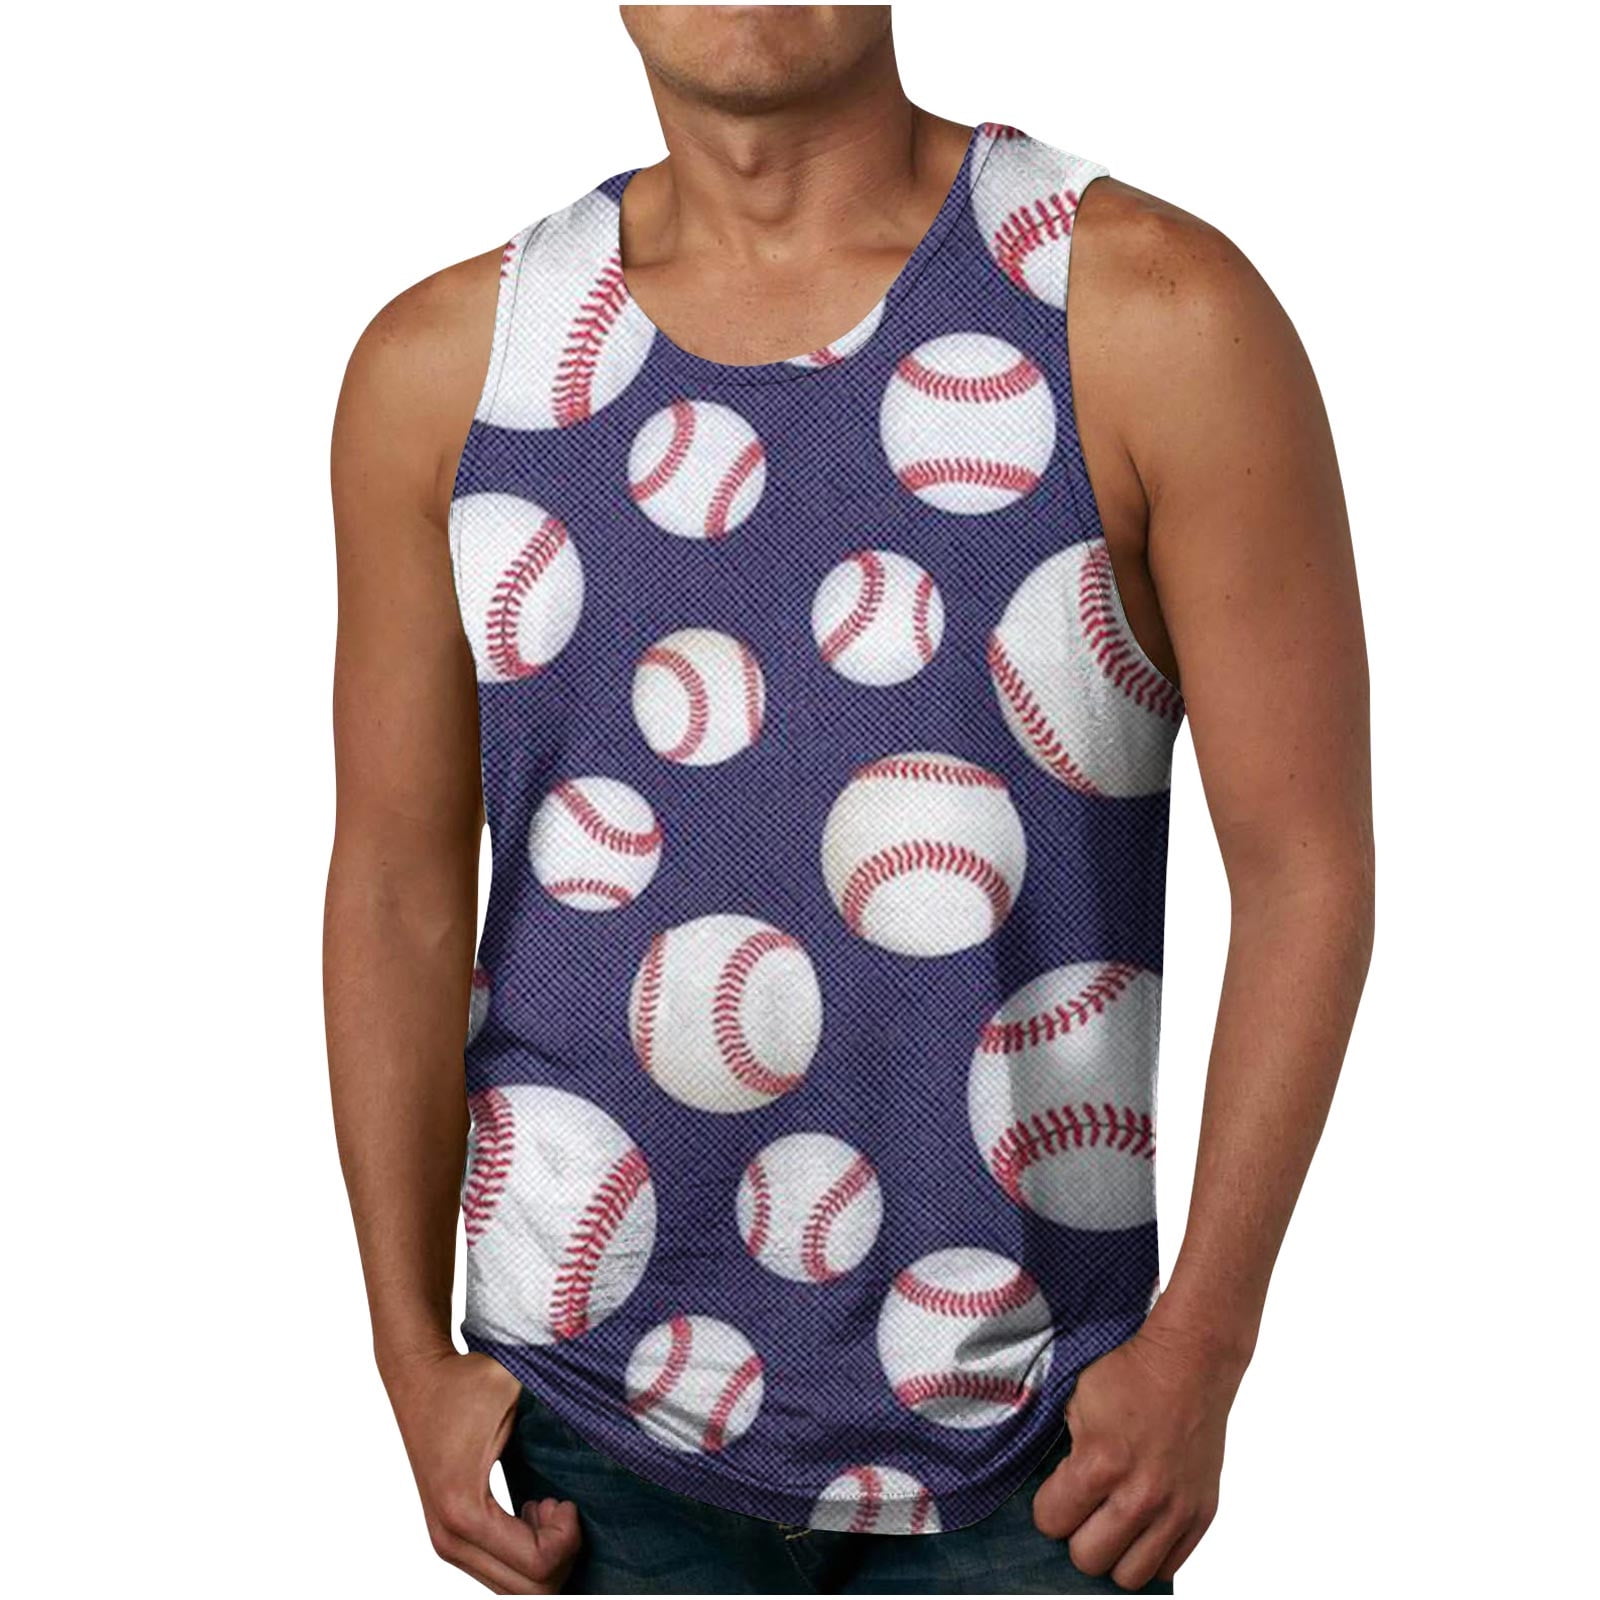 Dovford Tank Top Men,Men's 3D Tank Tops Summer Casual Novelty Sleeveless  Shirt Unisex Baseball Graphics Top Tees Shirt Tank Top 